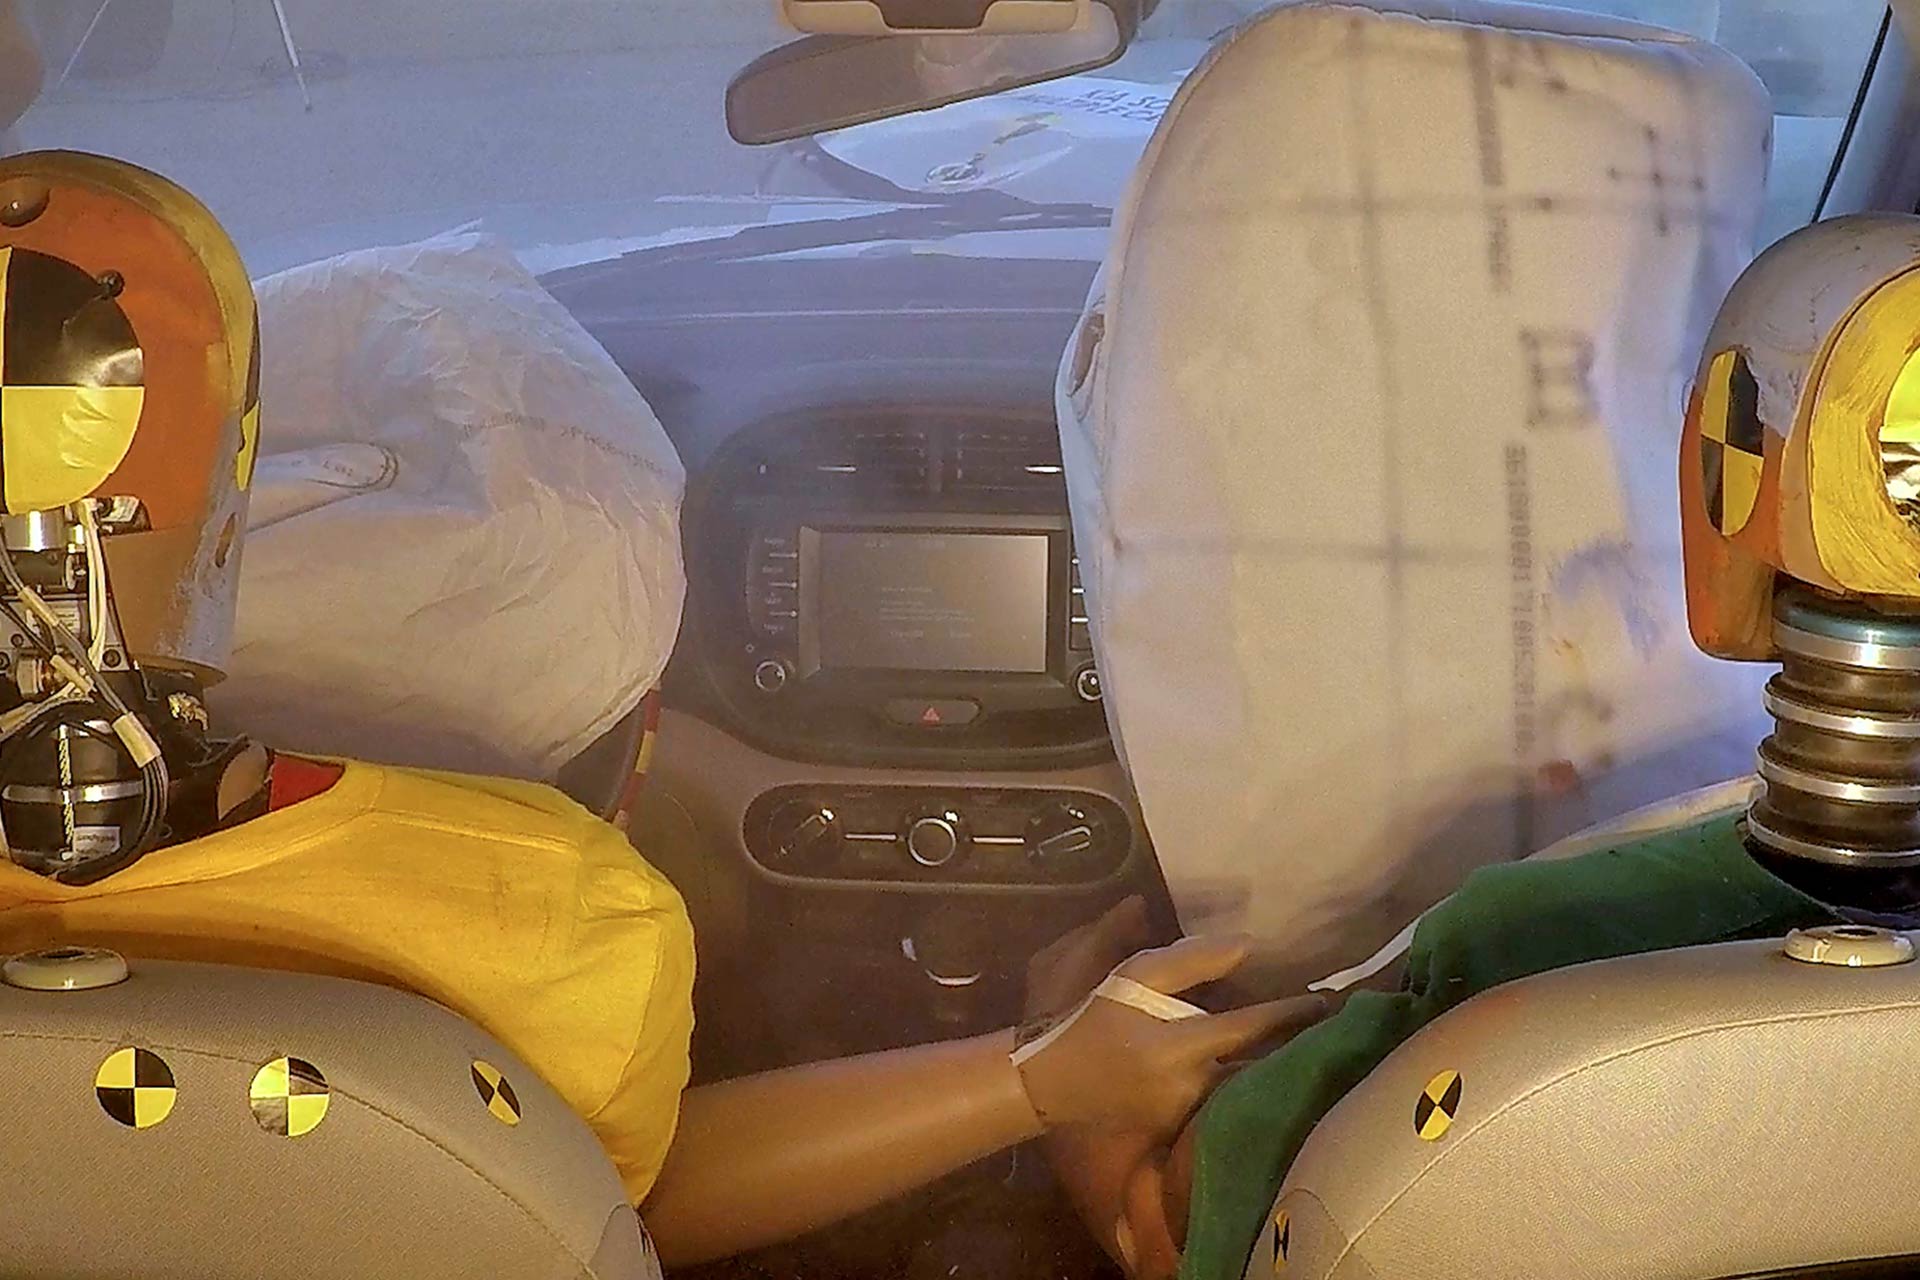 Hyundai creates first multi-collision airbag system